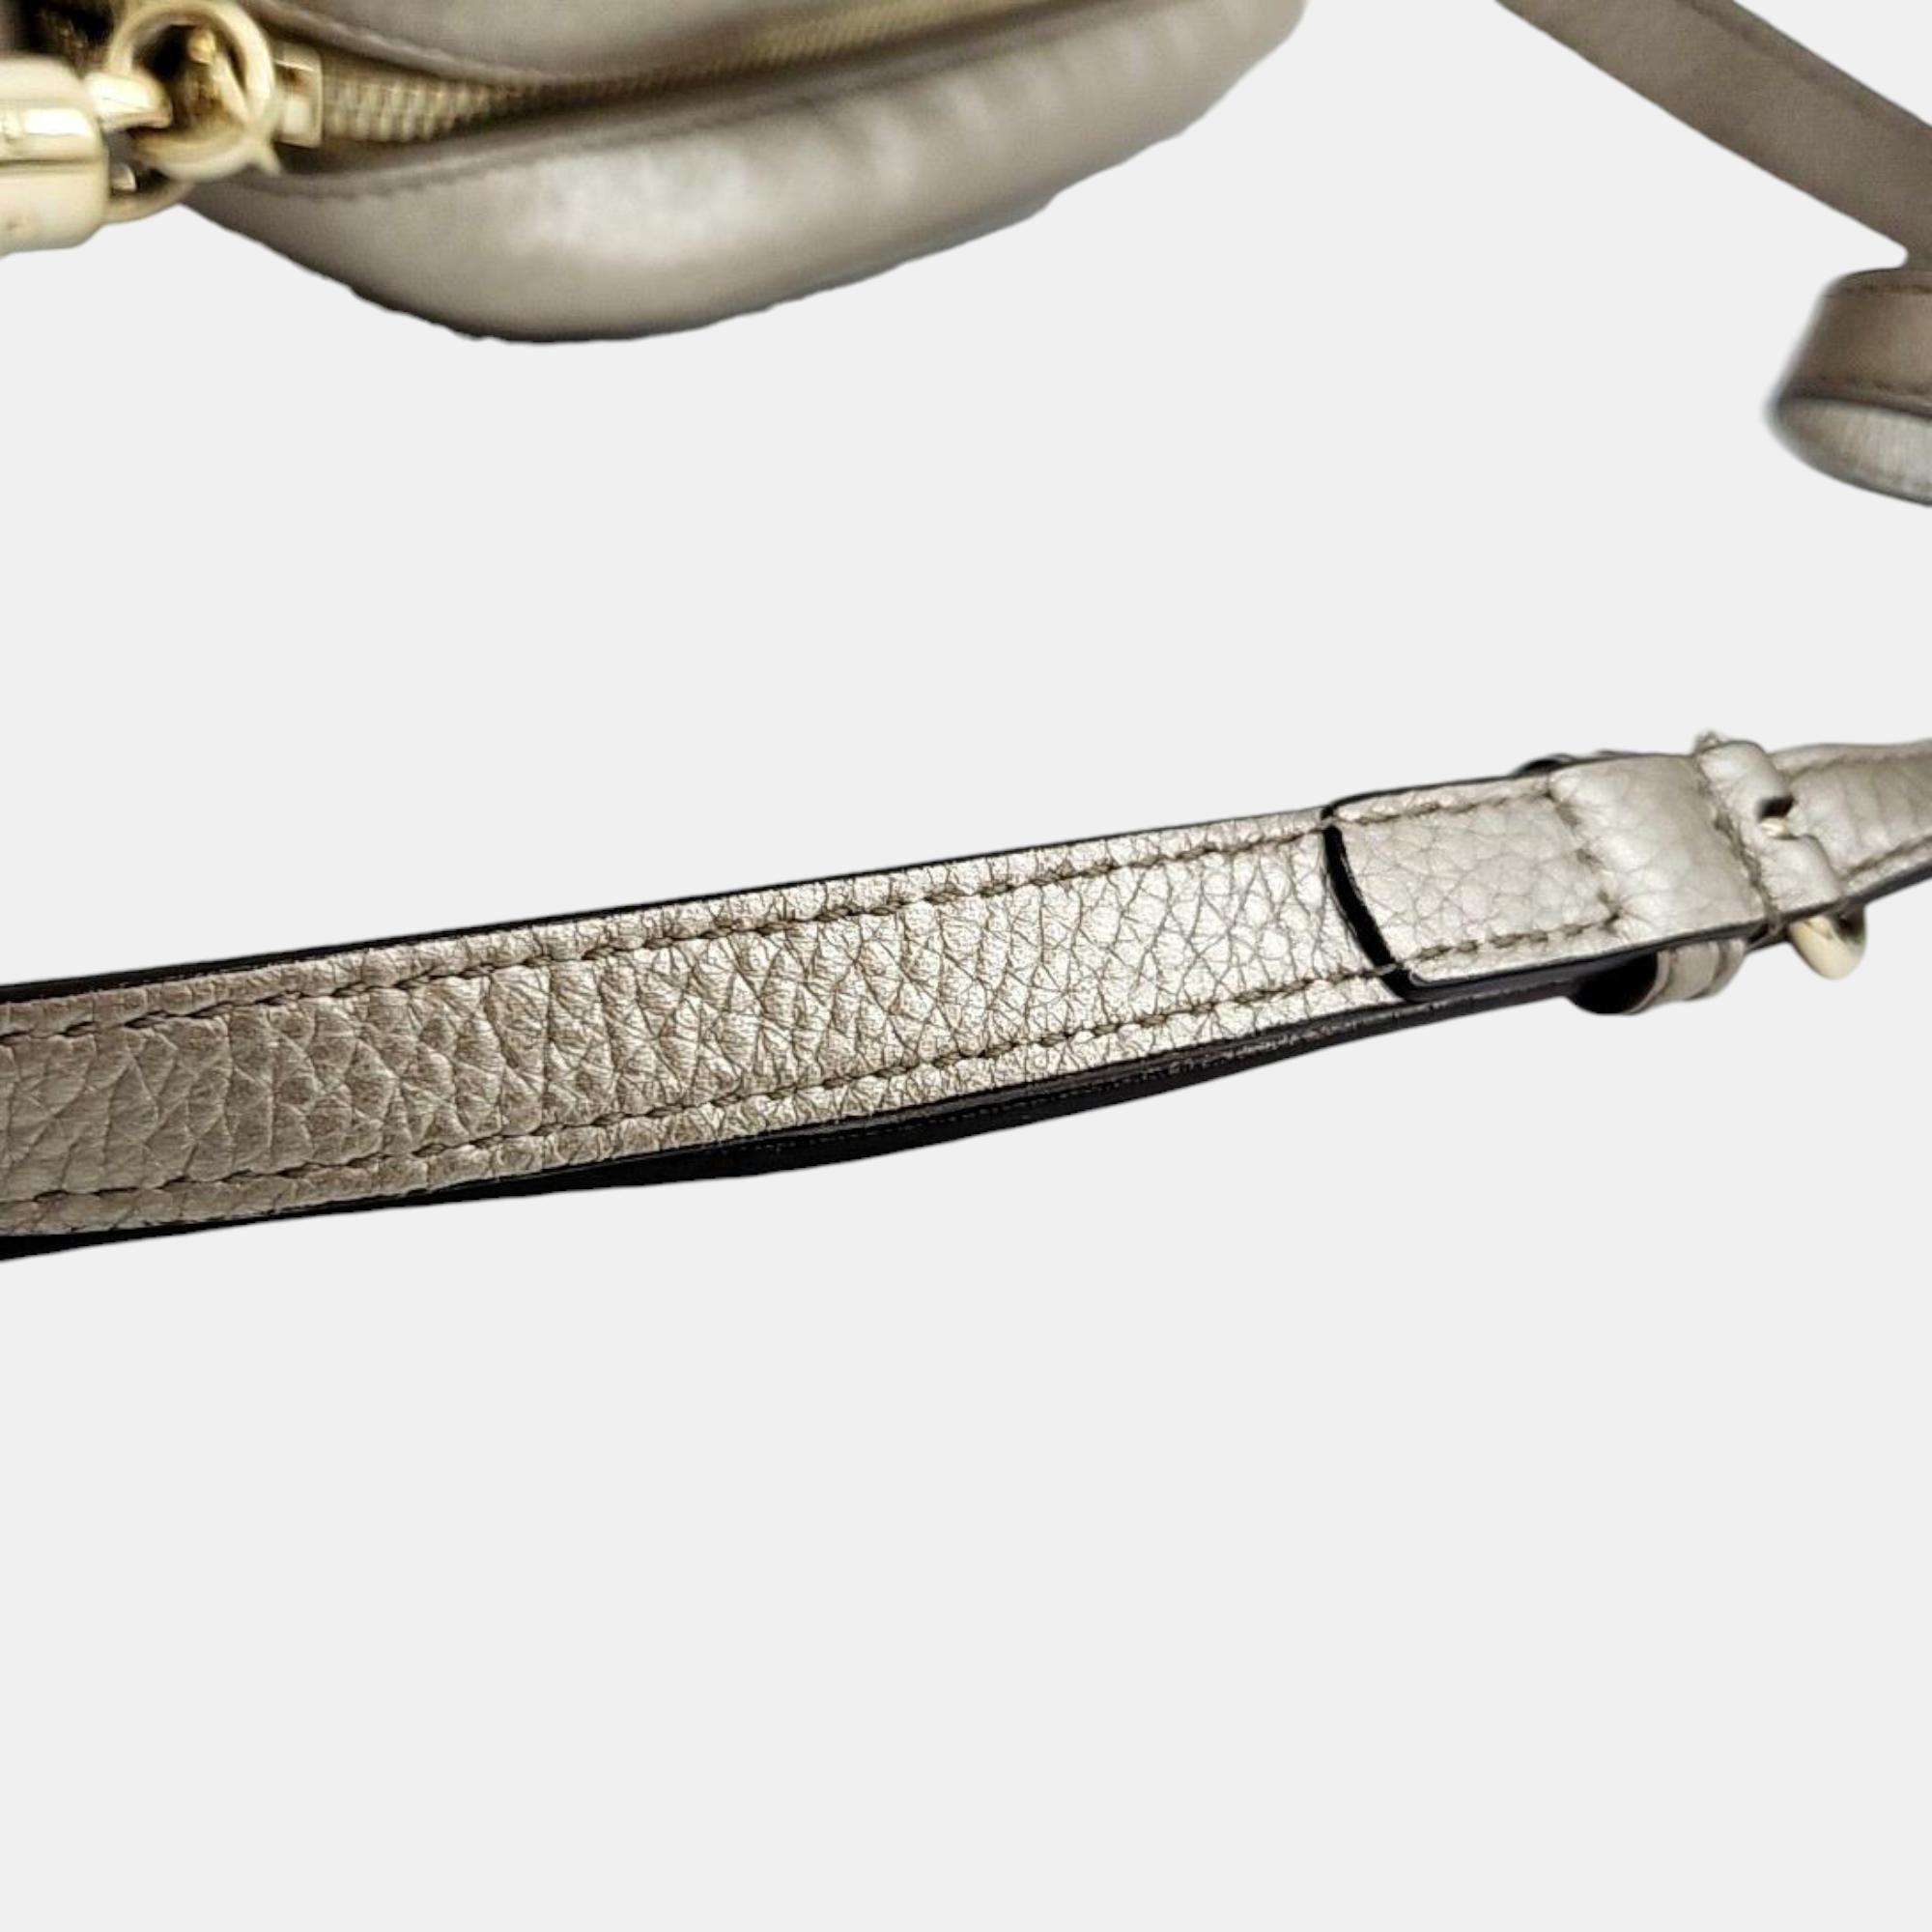 Gucci Beige Silver Leather Disco Bag (308364)